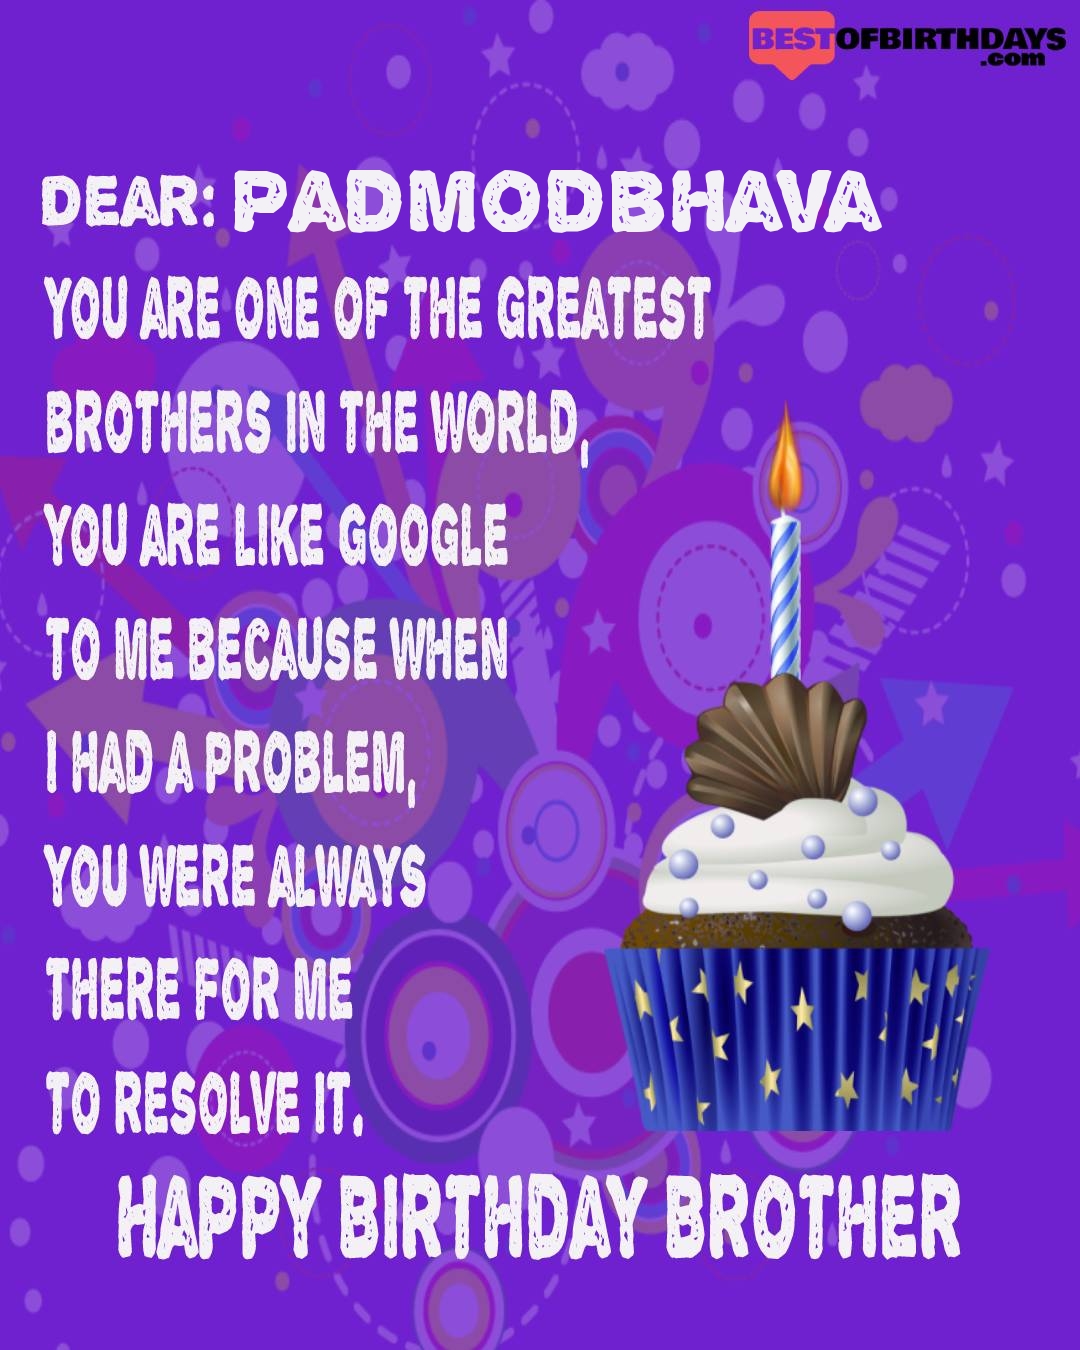 Happy birthday padmodbhava bhai brother bro